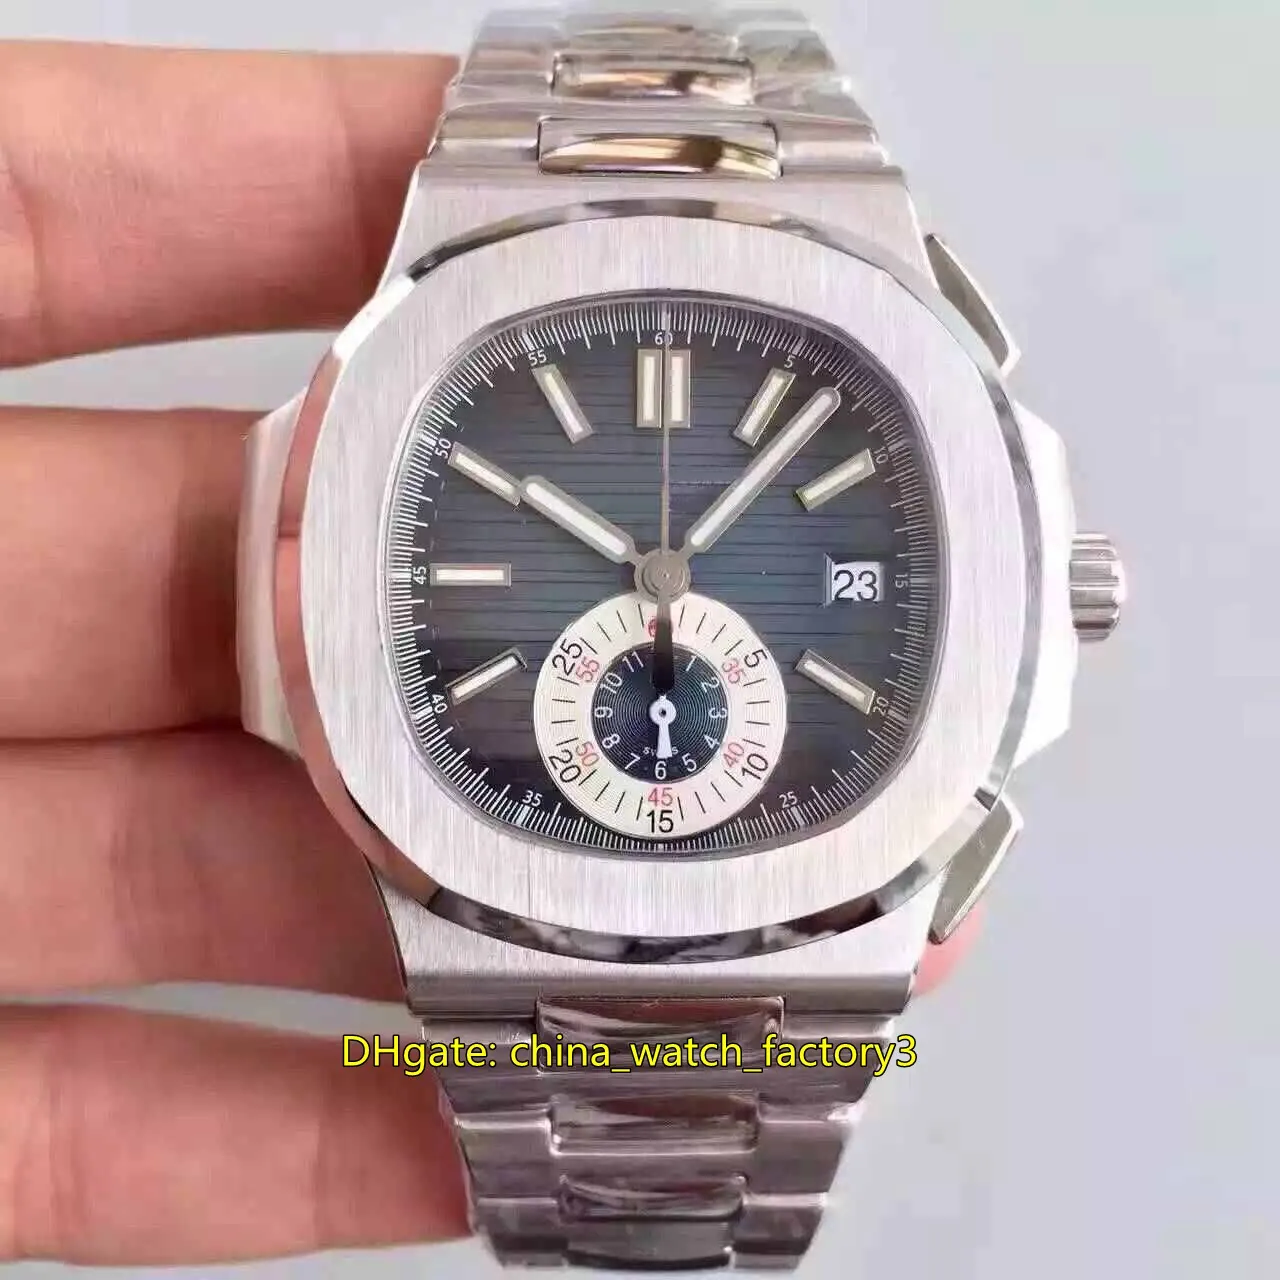 8 stijl horloges van topkwaliteit 40,5 mm Nautilus 5980 1A 5980R-001 chronograaf Workin saffierglas ETA 7750 CAL CH 28-520 C beweging 280p